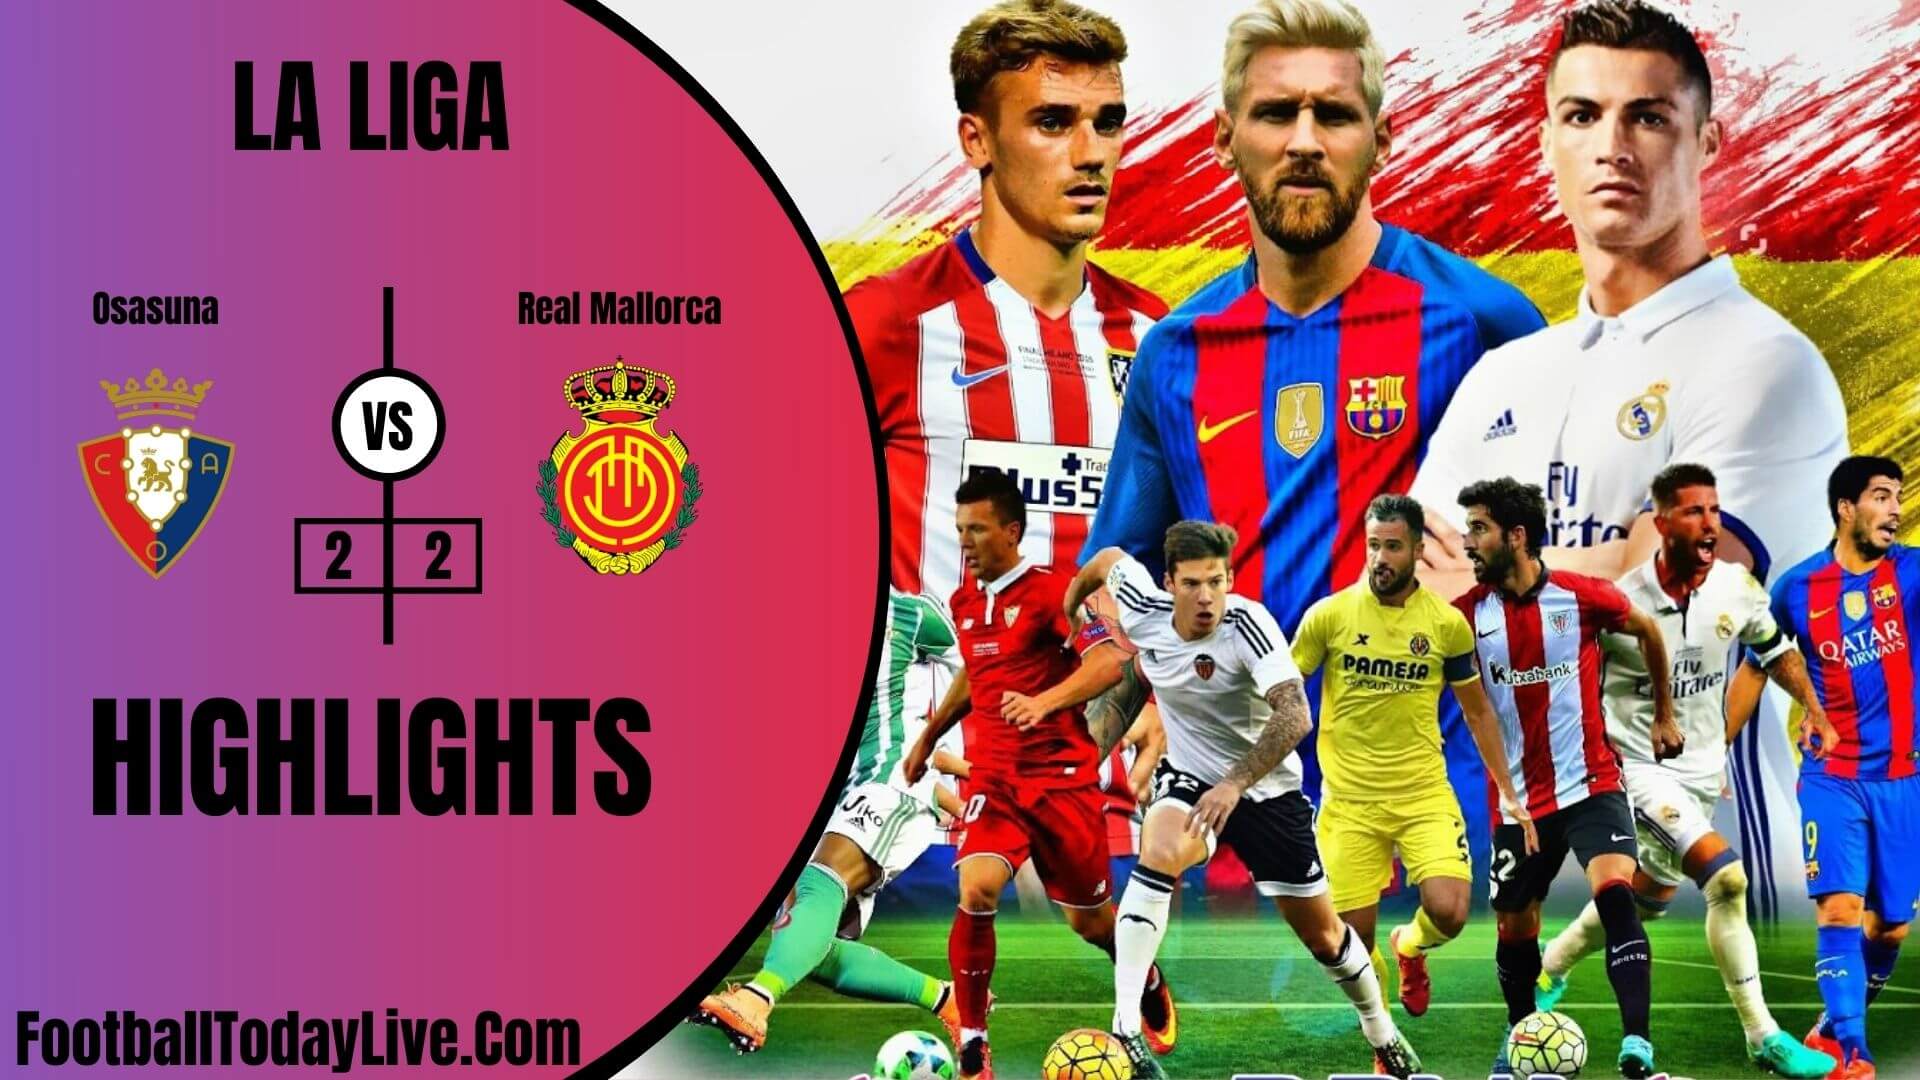 Osasuna Vs Real Mallorca Highlights 2020 La Liga Week 38